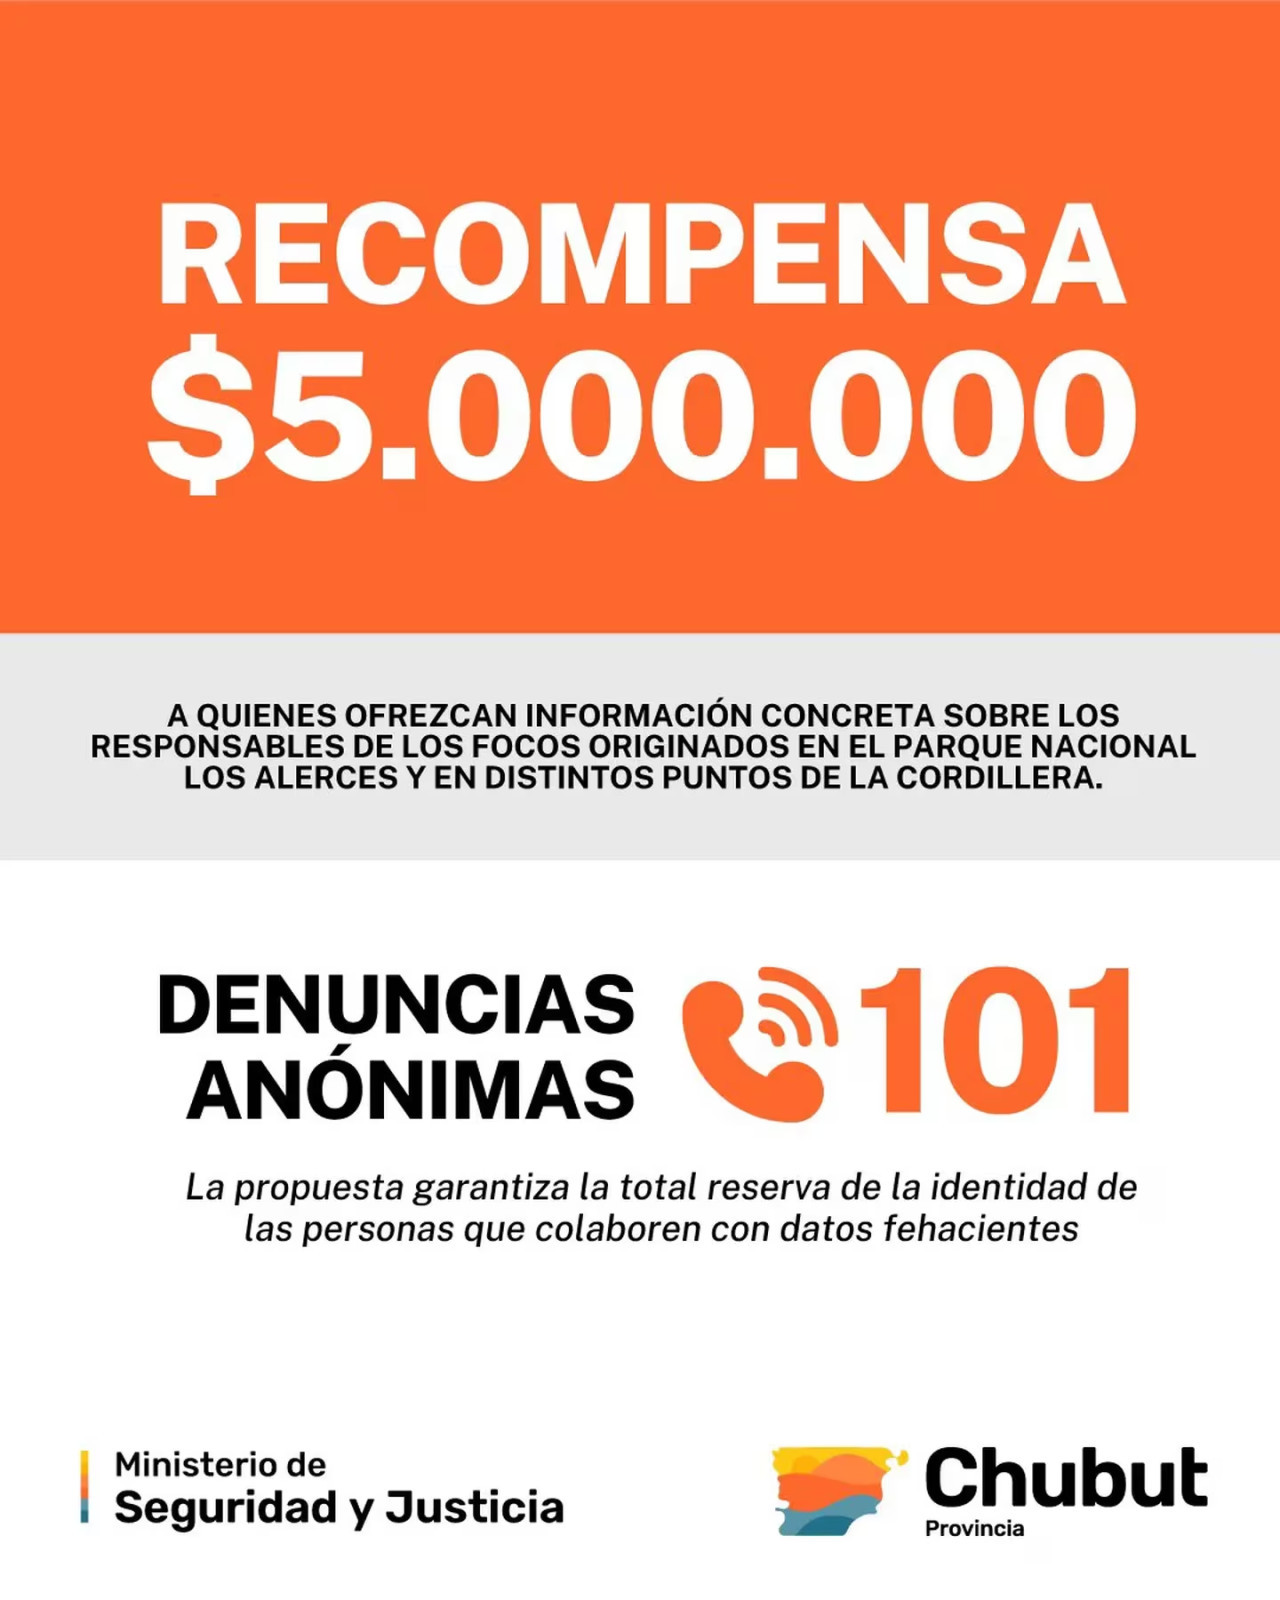 El gobierno de Chubut ofrecen una recompensa. Foto: X @gobiernochubut